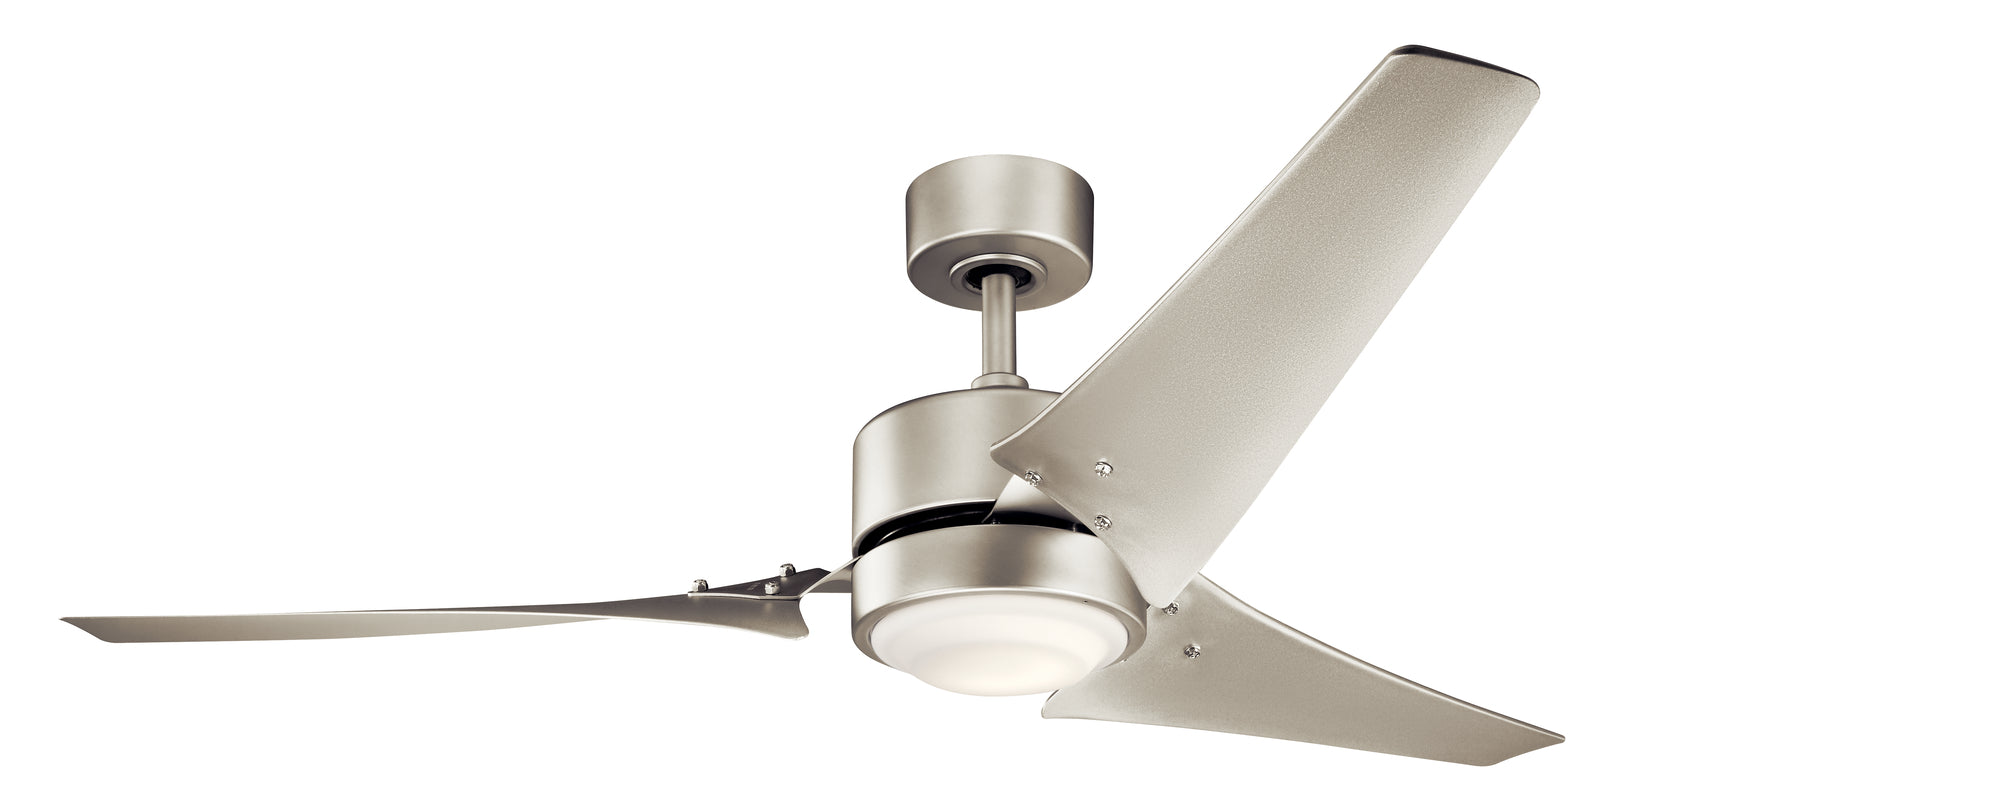 RANA Ceiling fan Nickel INTEGRATED LED - 310155NI | KICHLER